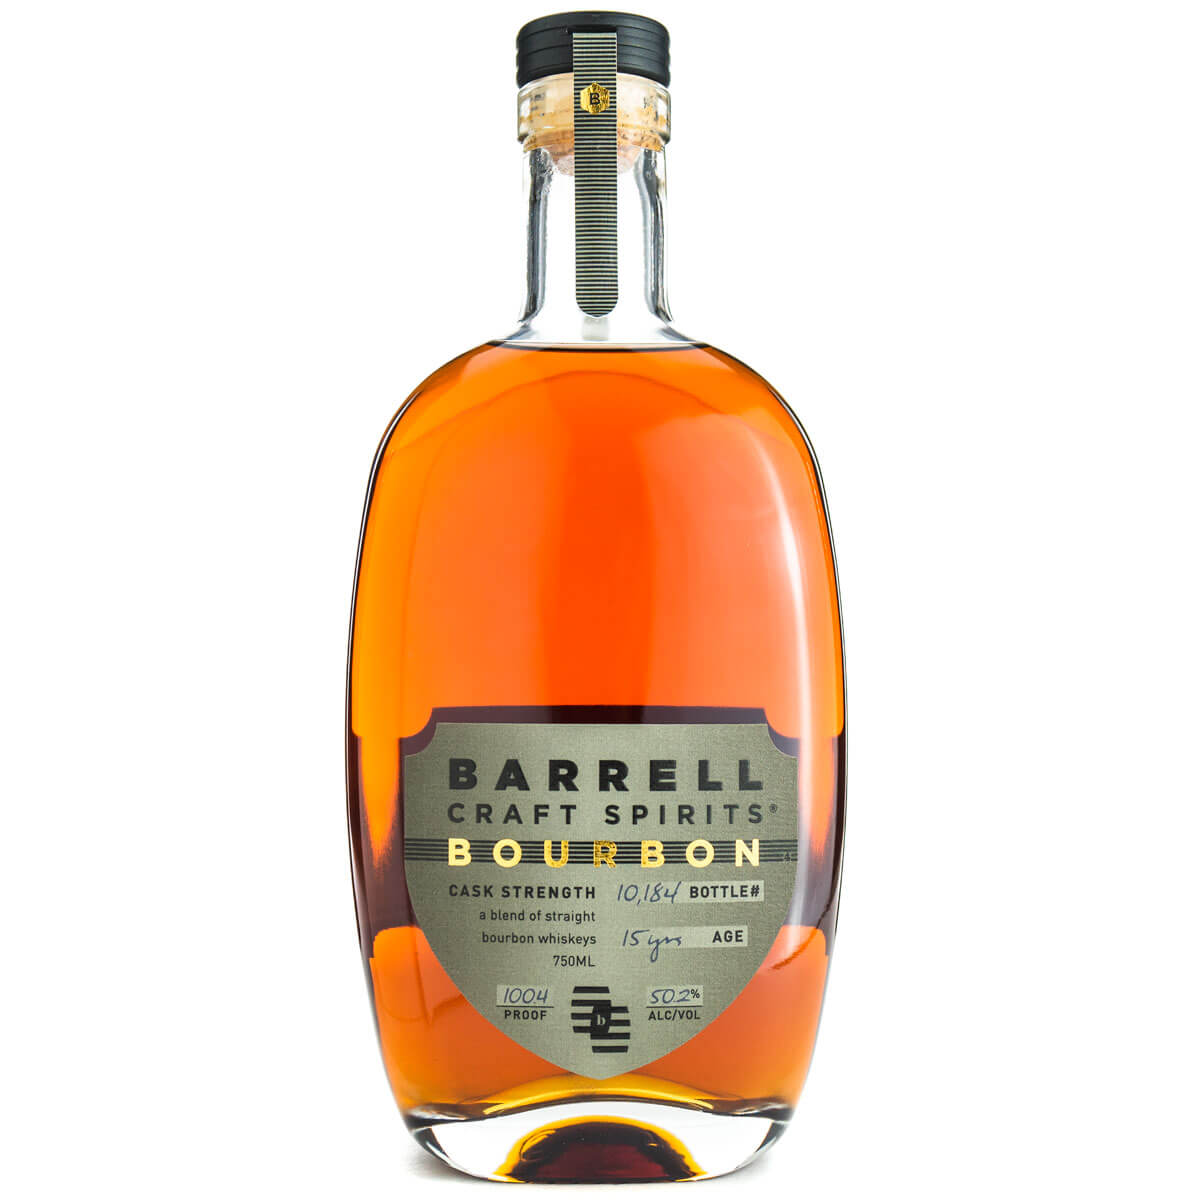 Barrell Craft Spirits Gray Label Bourbon bottle